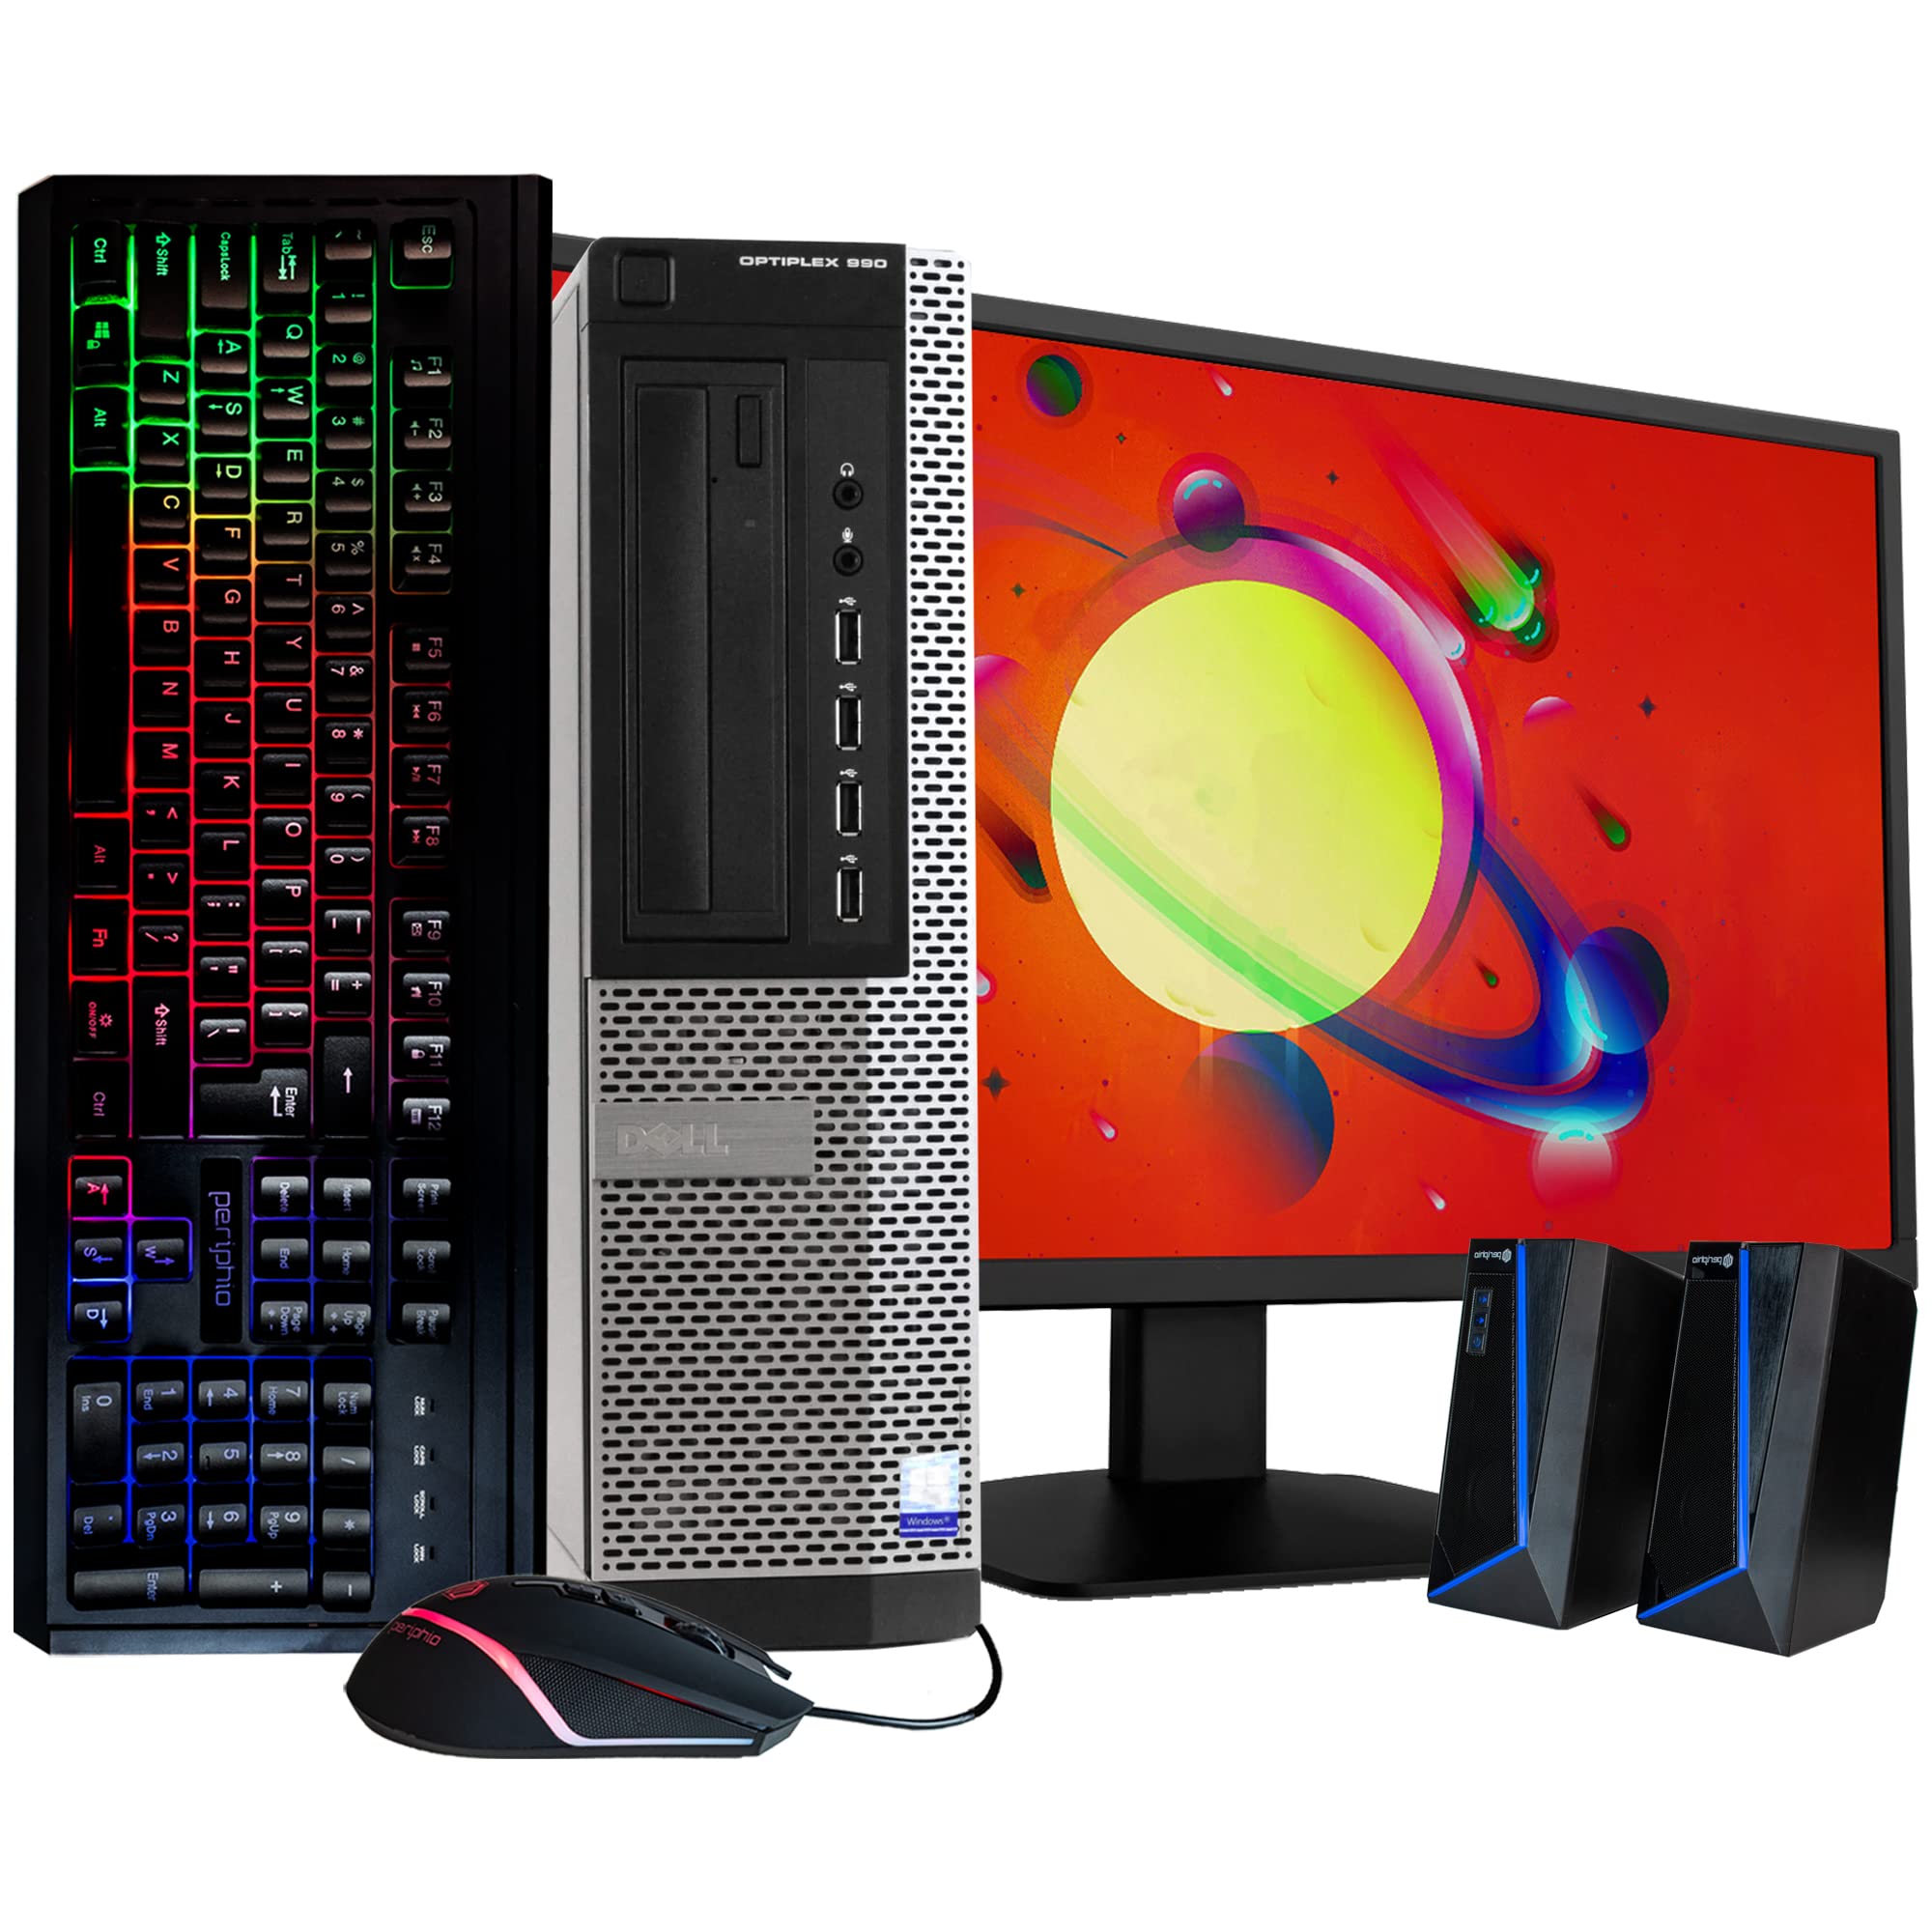 Dell Optiplex 990 Desktop Computer PC, Intel Quad-Core i5, 2TB HDD Storage, 16GB DDR3 RAM, Windows 10 Pro, DVD, WiFi, 20in Monitor, RGB Productivity Bundle (Renewed)